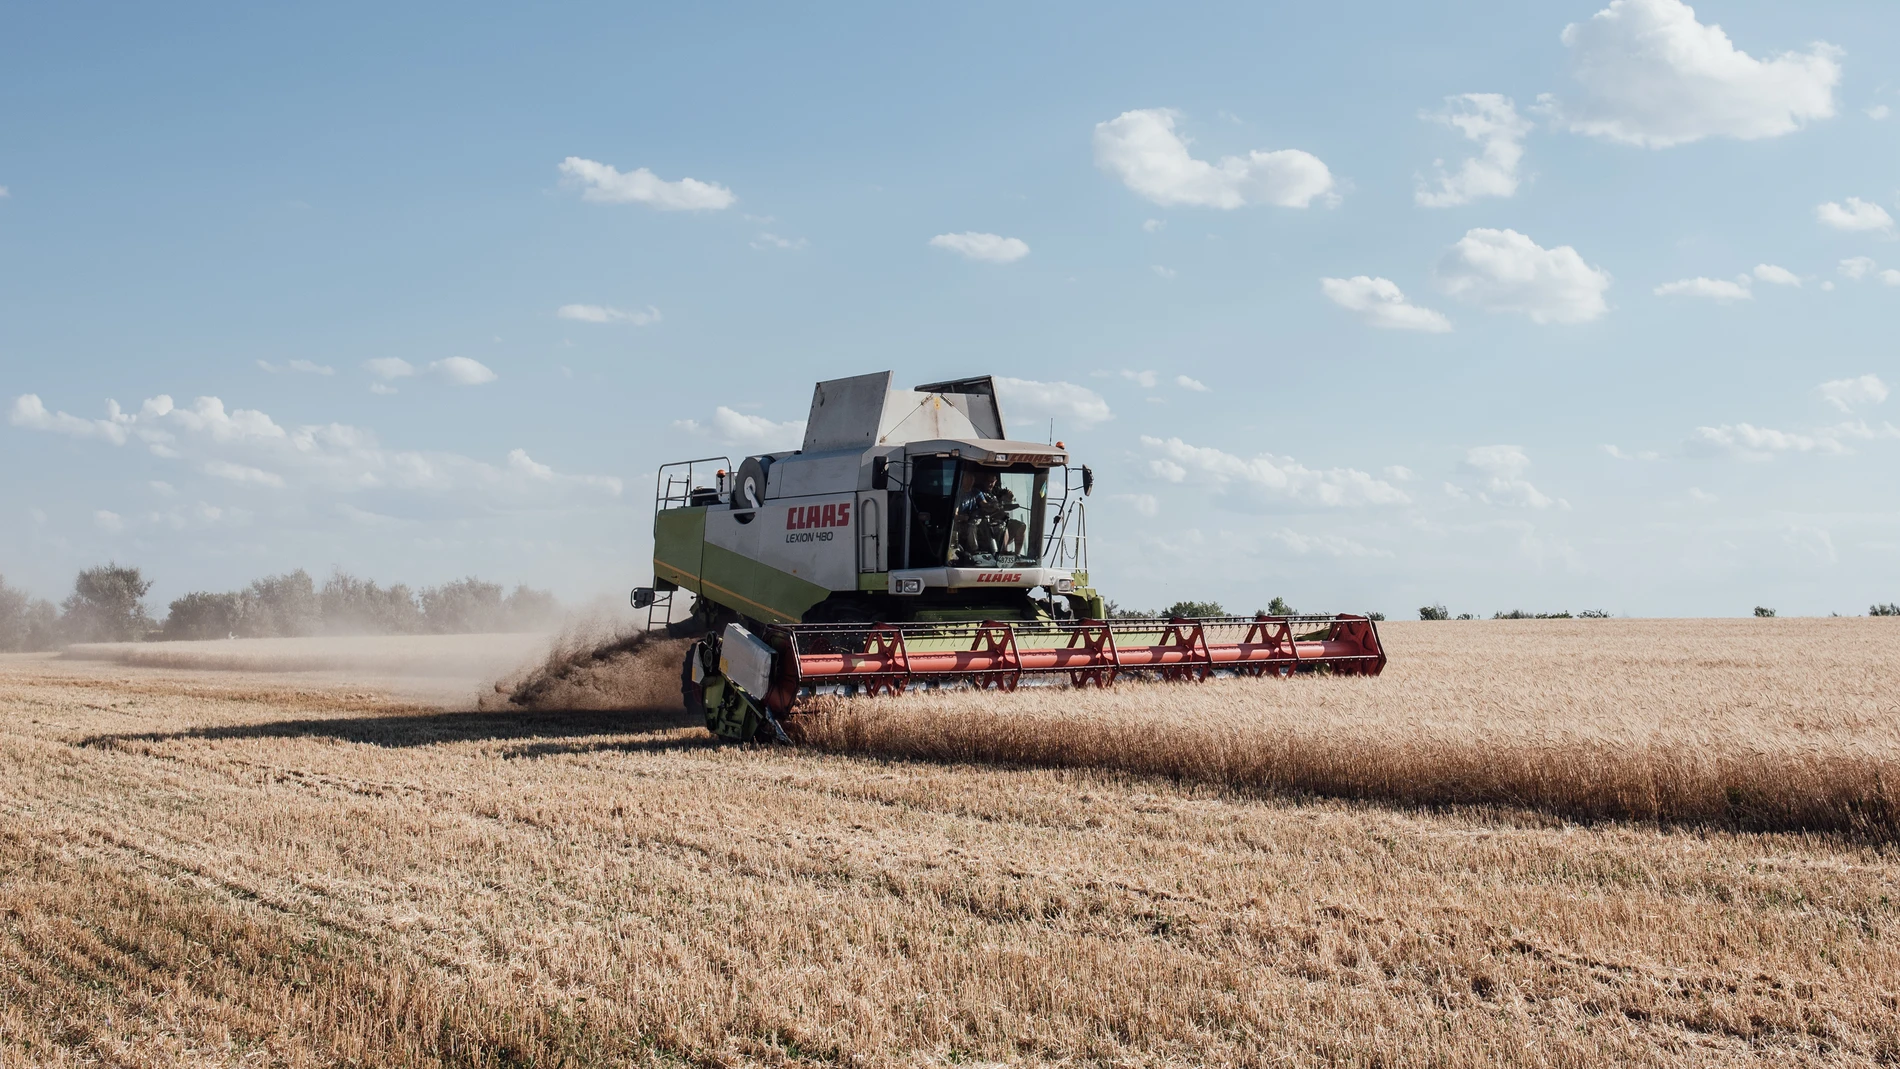 July 14, 2022, Liubashivka, Ukraine: A combine harvests wheat. Liubashivka, 14 July 2022. (Foto de ARCHIVO) 14/07/2022